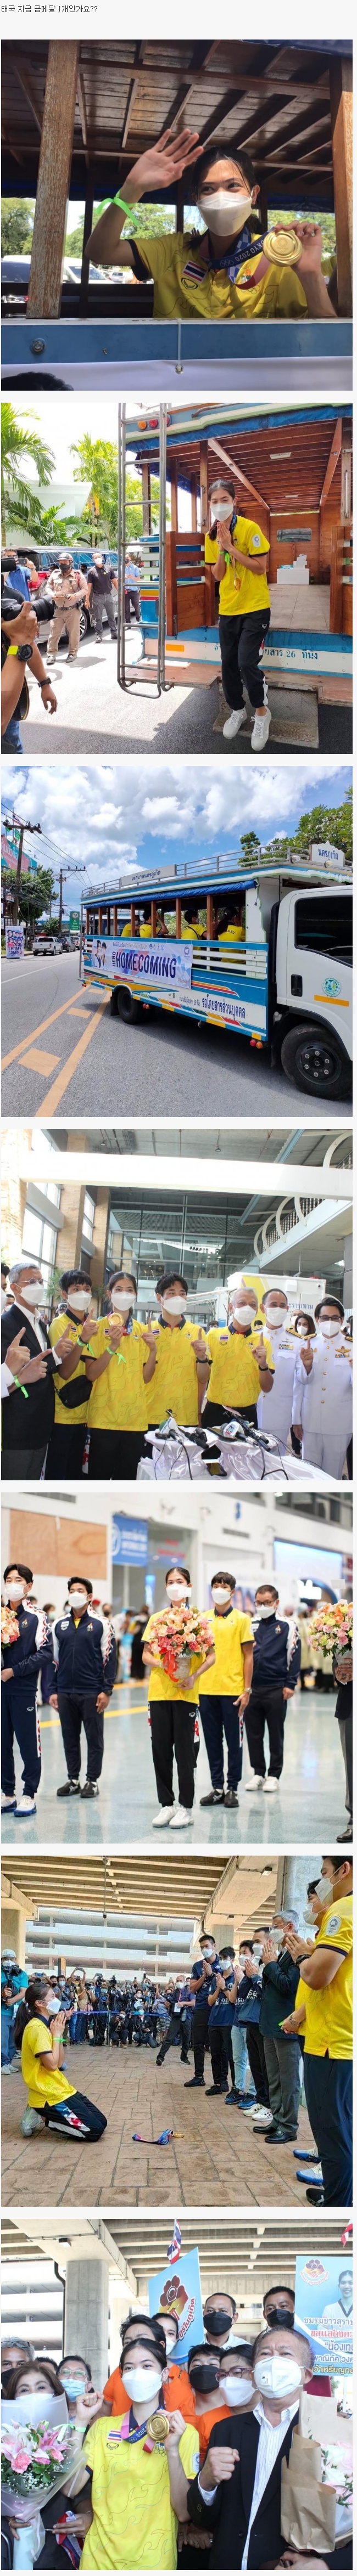 Taekwon Girl Returns to Thailand After Winning Gold Medal